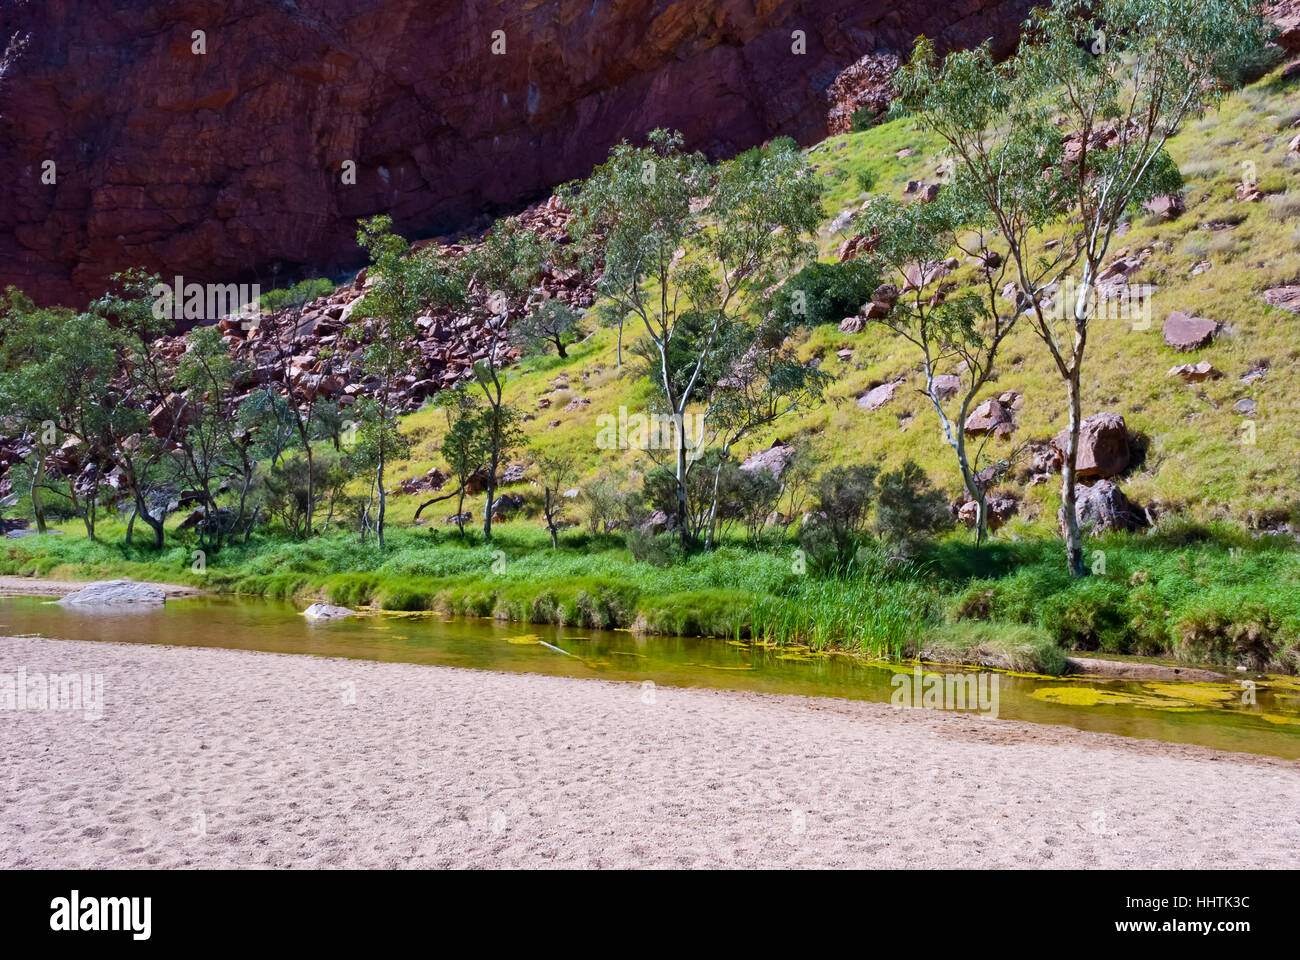 Wild nature at Simpsons Gap, Northen Territory, Australia Stock Photo